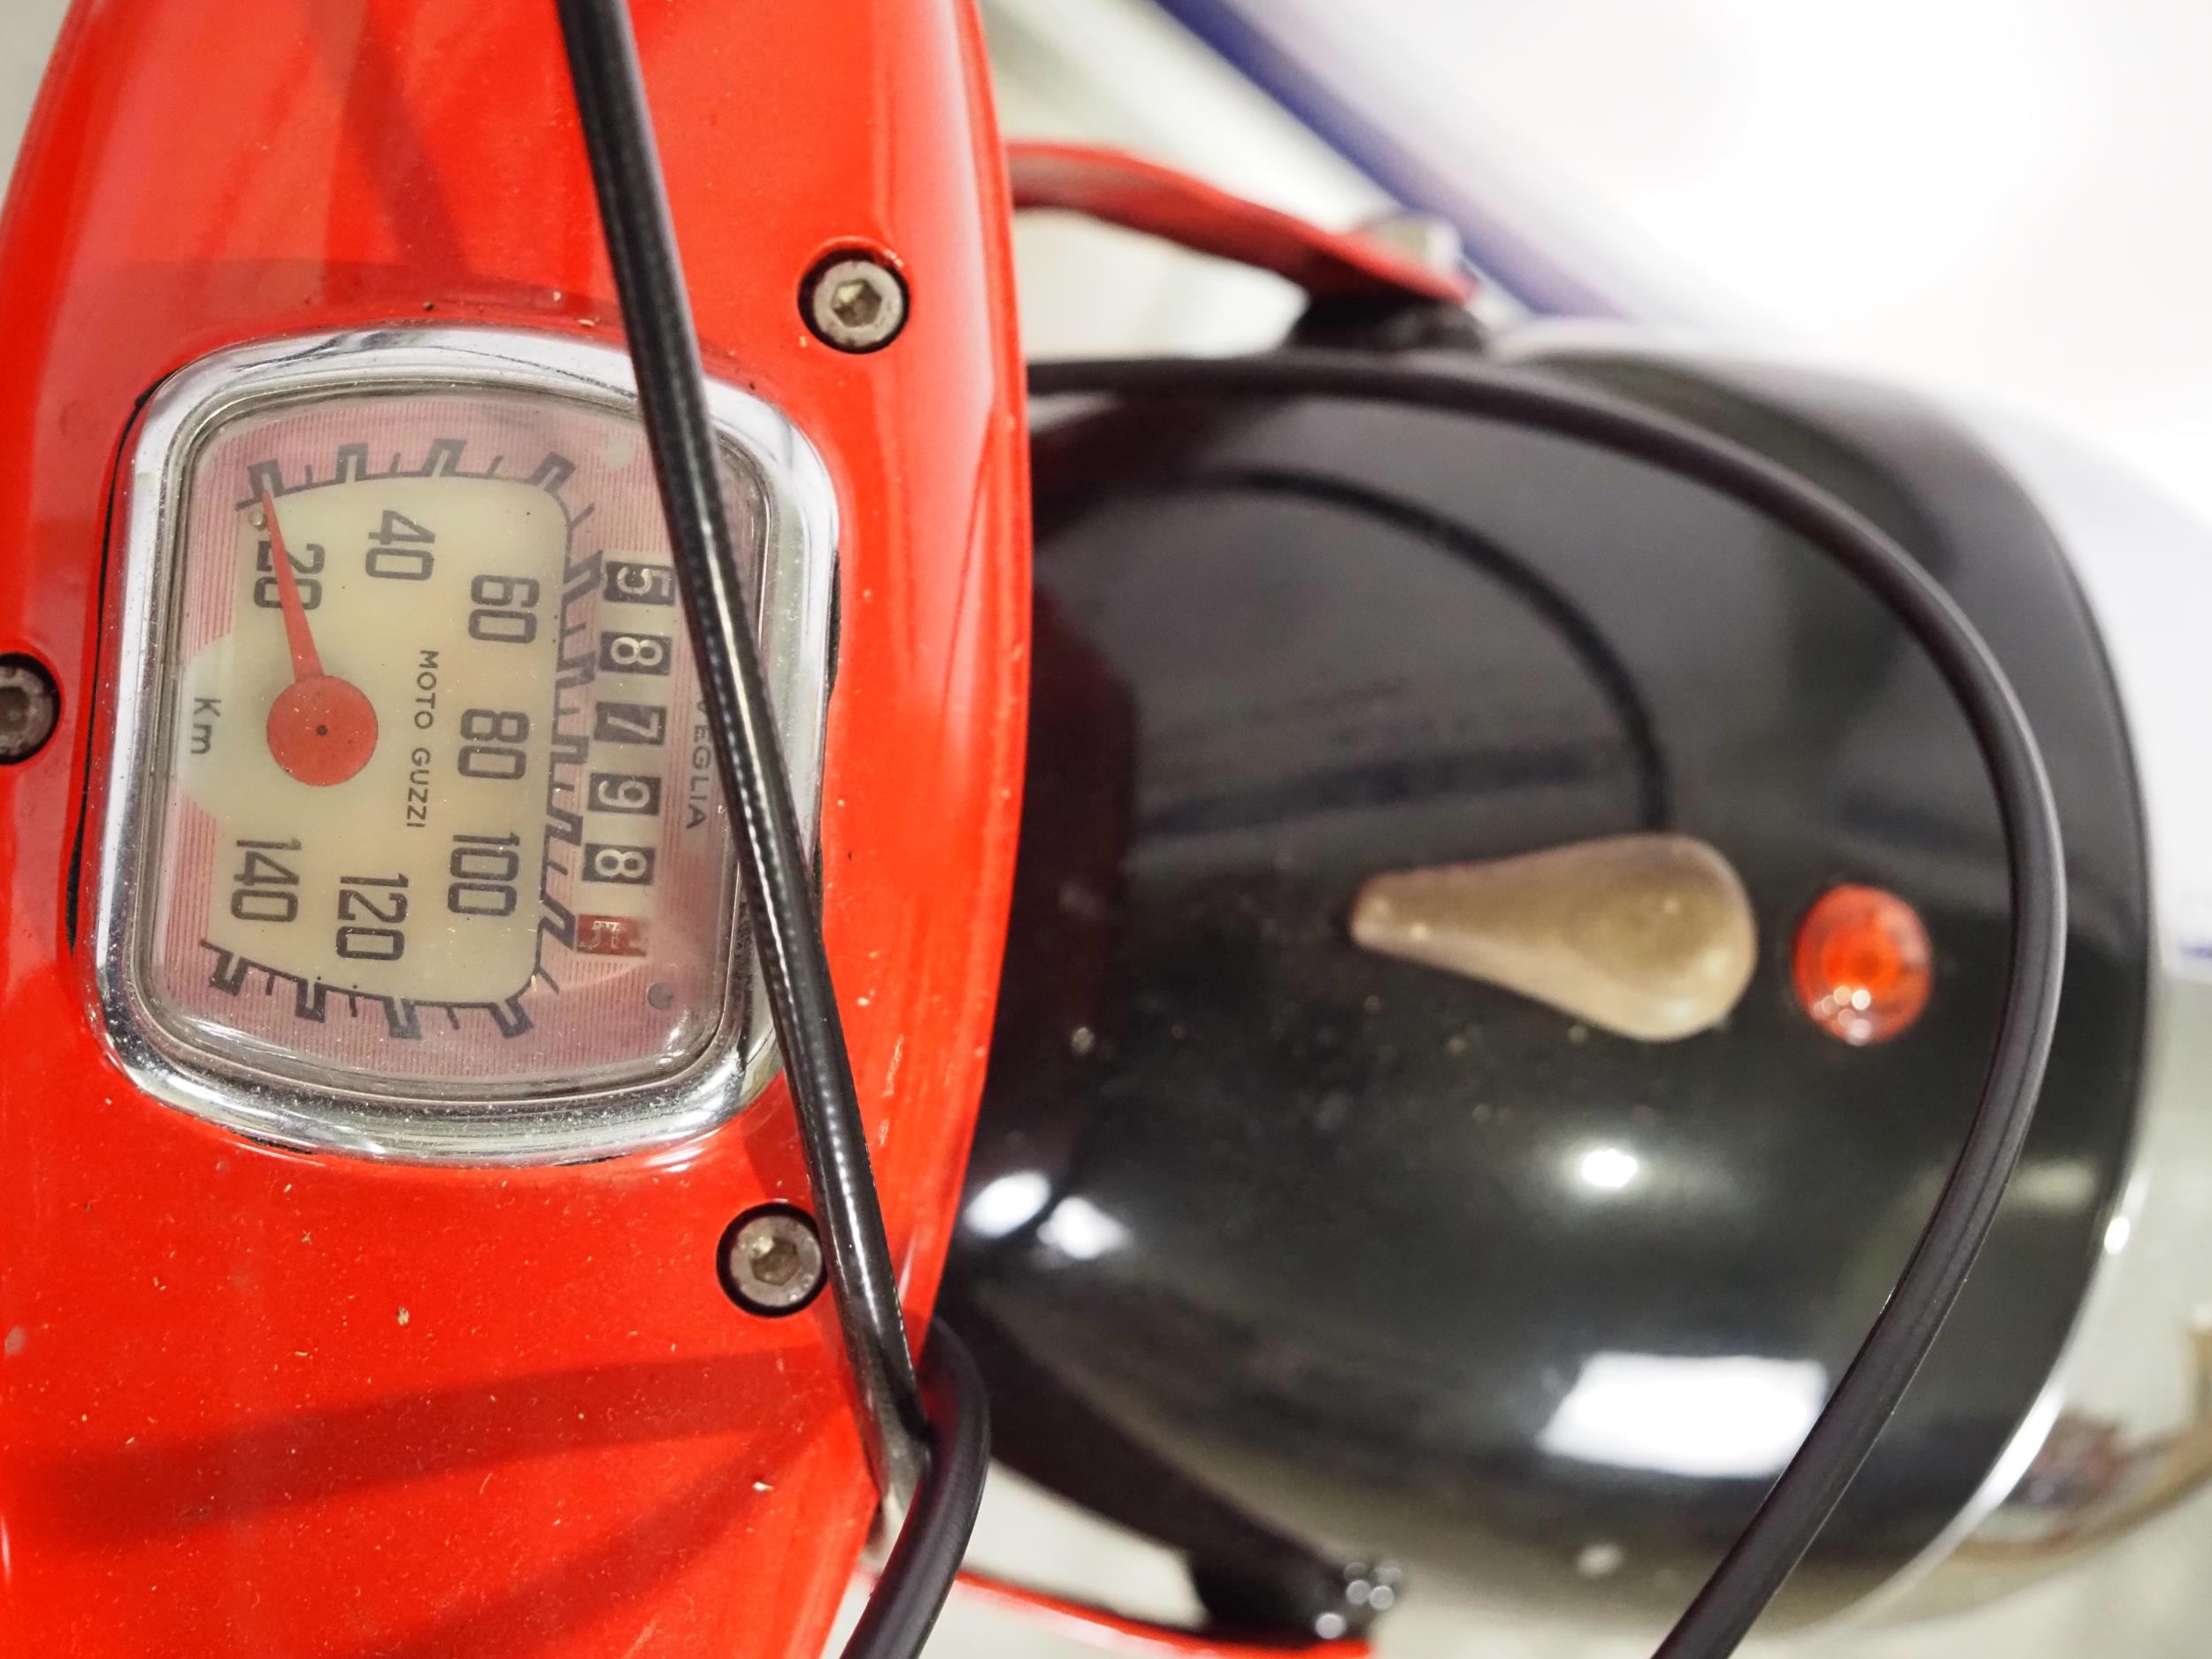 Moto Guzzi Lodola Gran Turismo motorcycle. 1961. 235cc Engine No. RDP36 Bike was last ridden in 2020 - Image 6 of 7